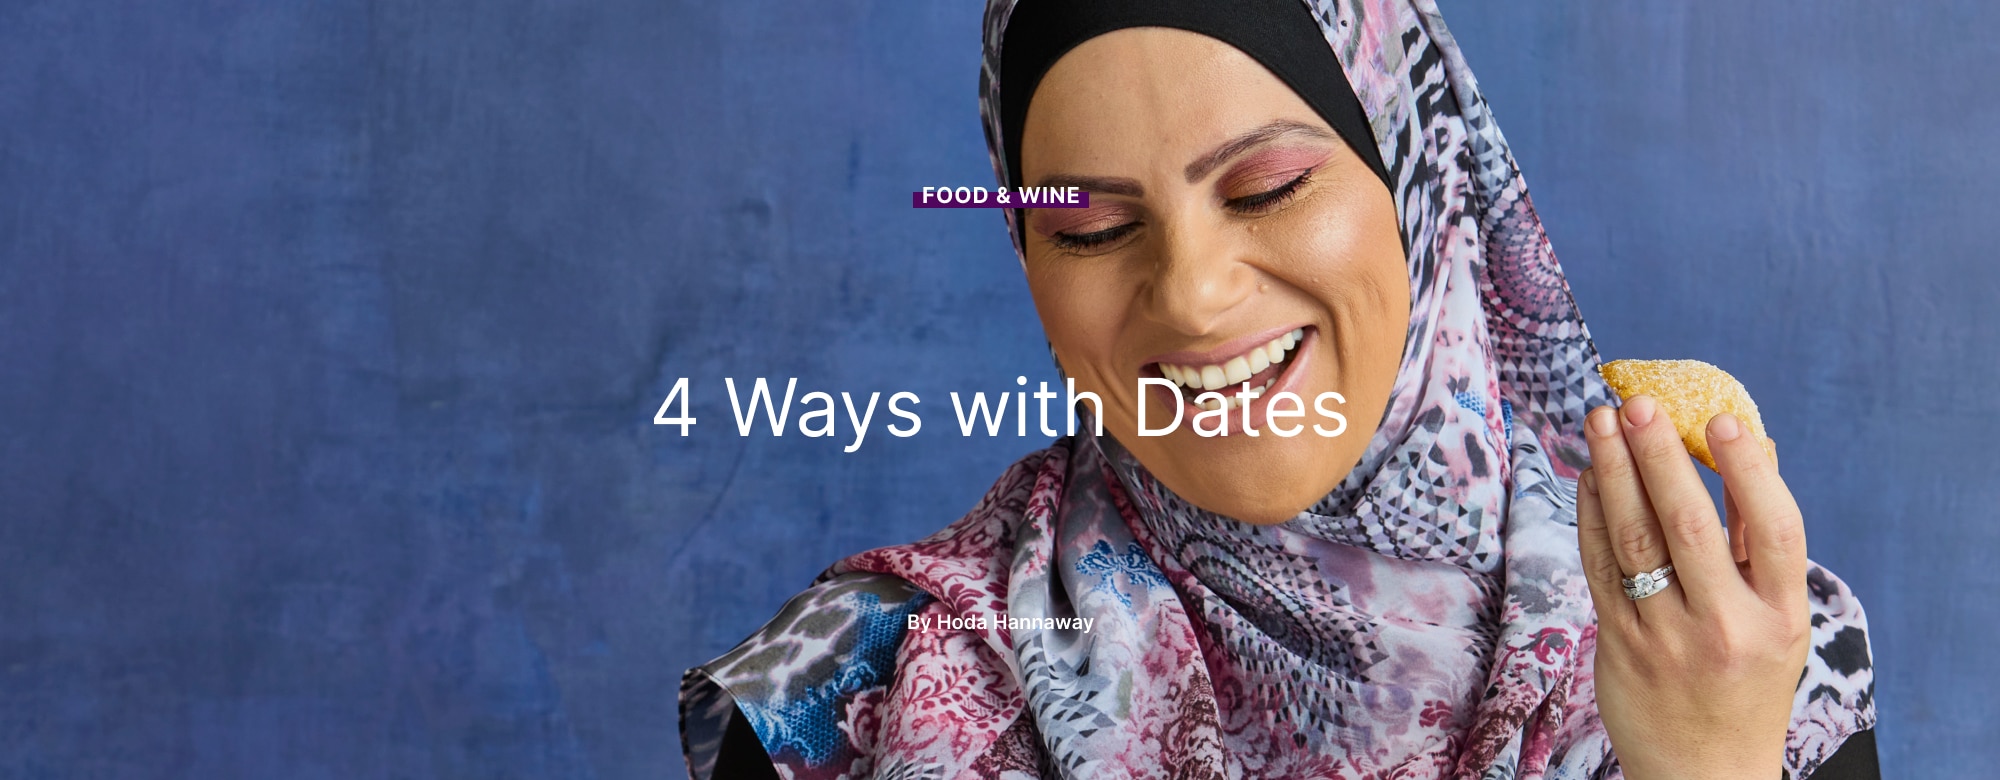 4 Ways with Dates